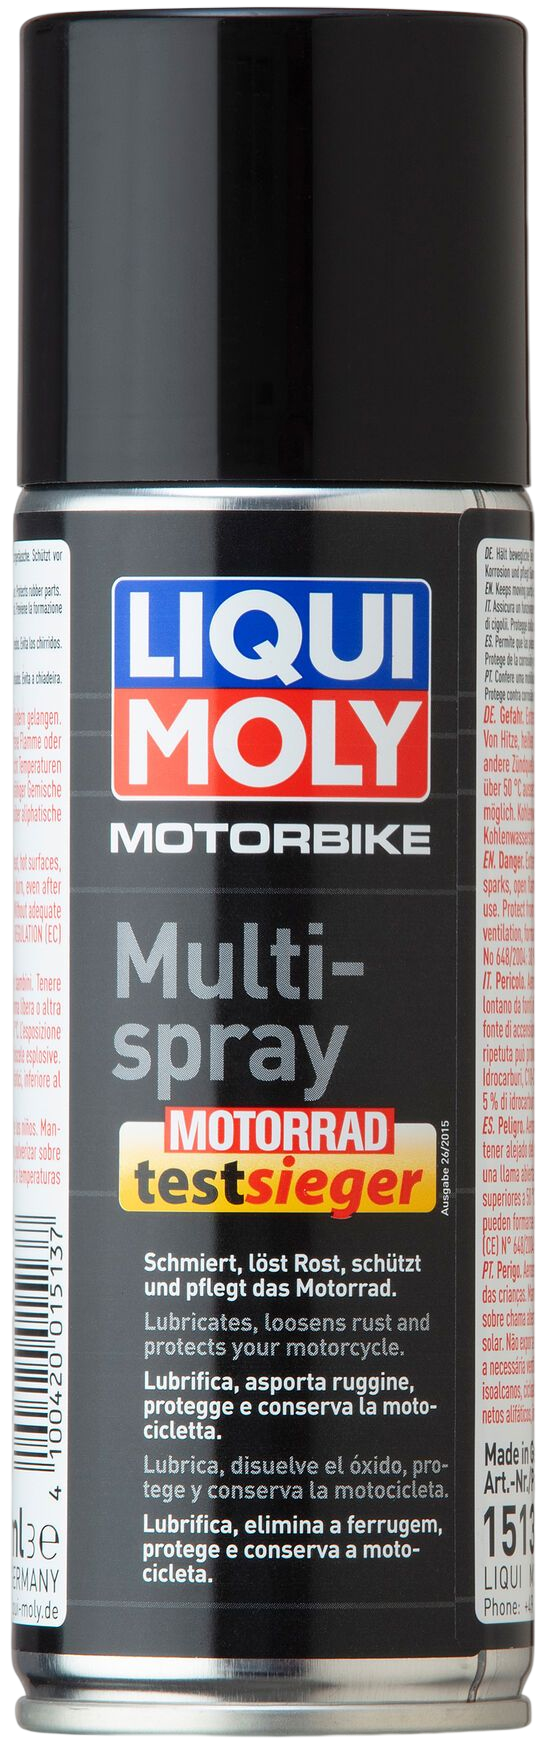 Liqui Moly Motorbike Multispray, 200 ml